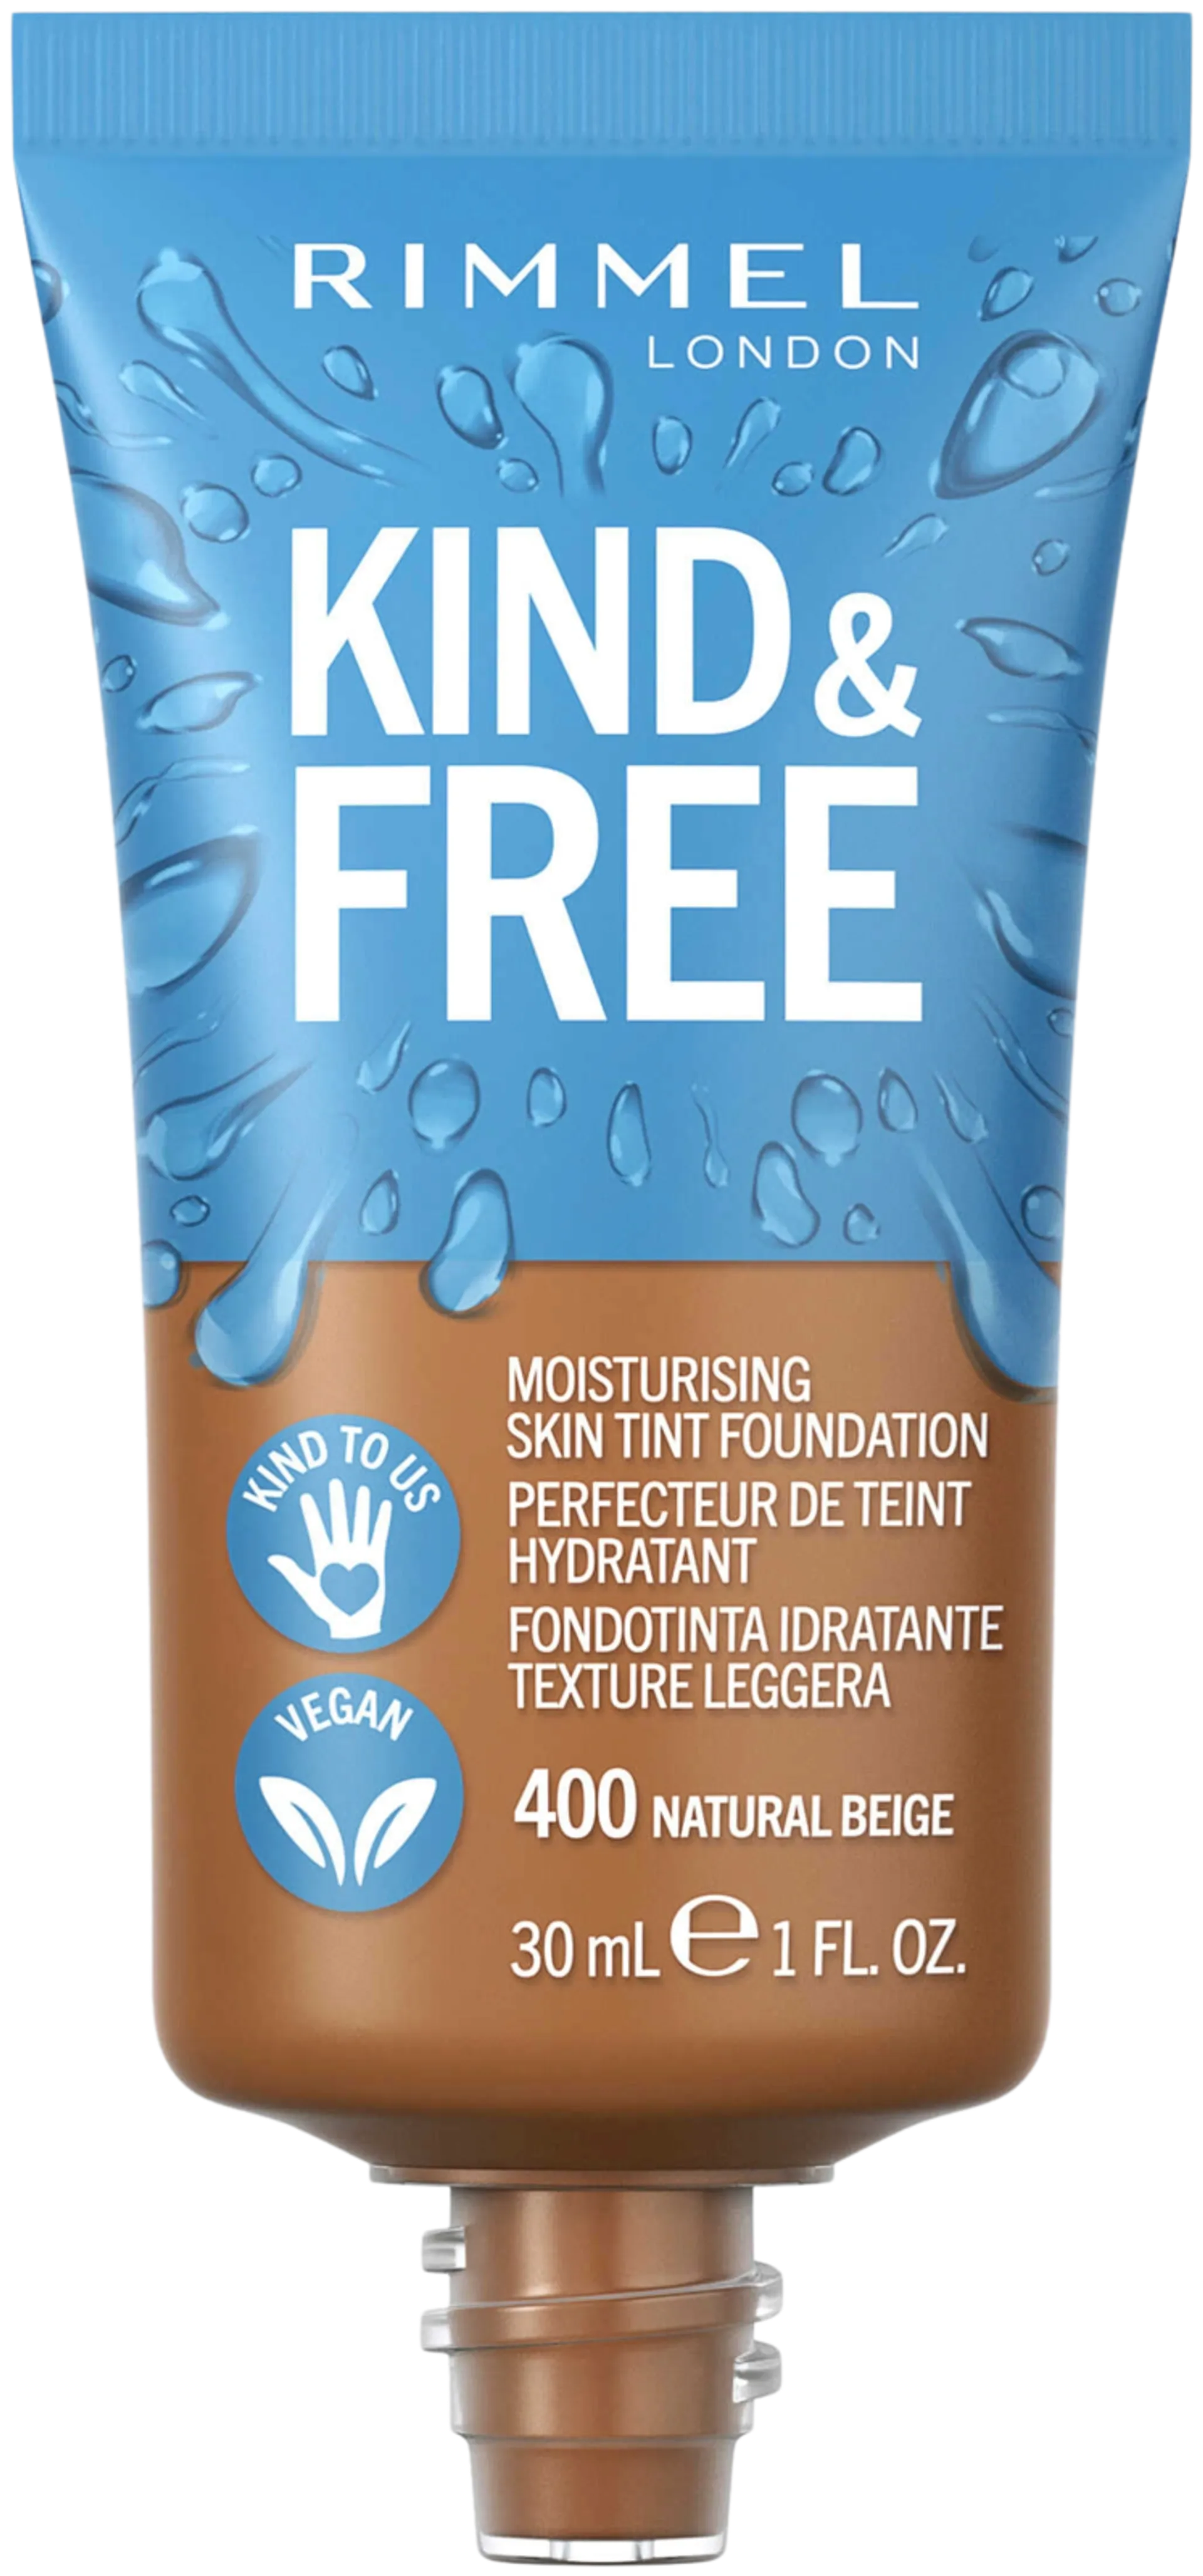 Rimmel Kind & Free Skin Tint Foundation 30 ml, 400 Natural Beige meikkivoide - 2